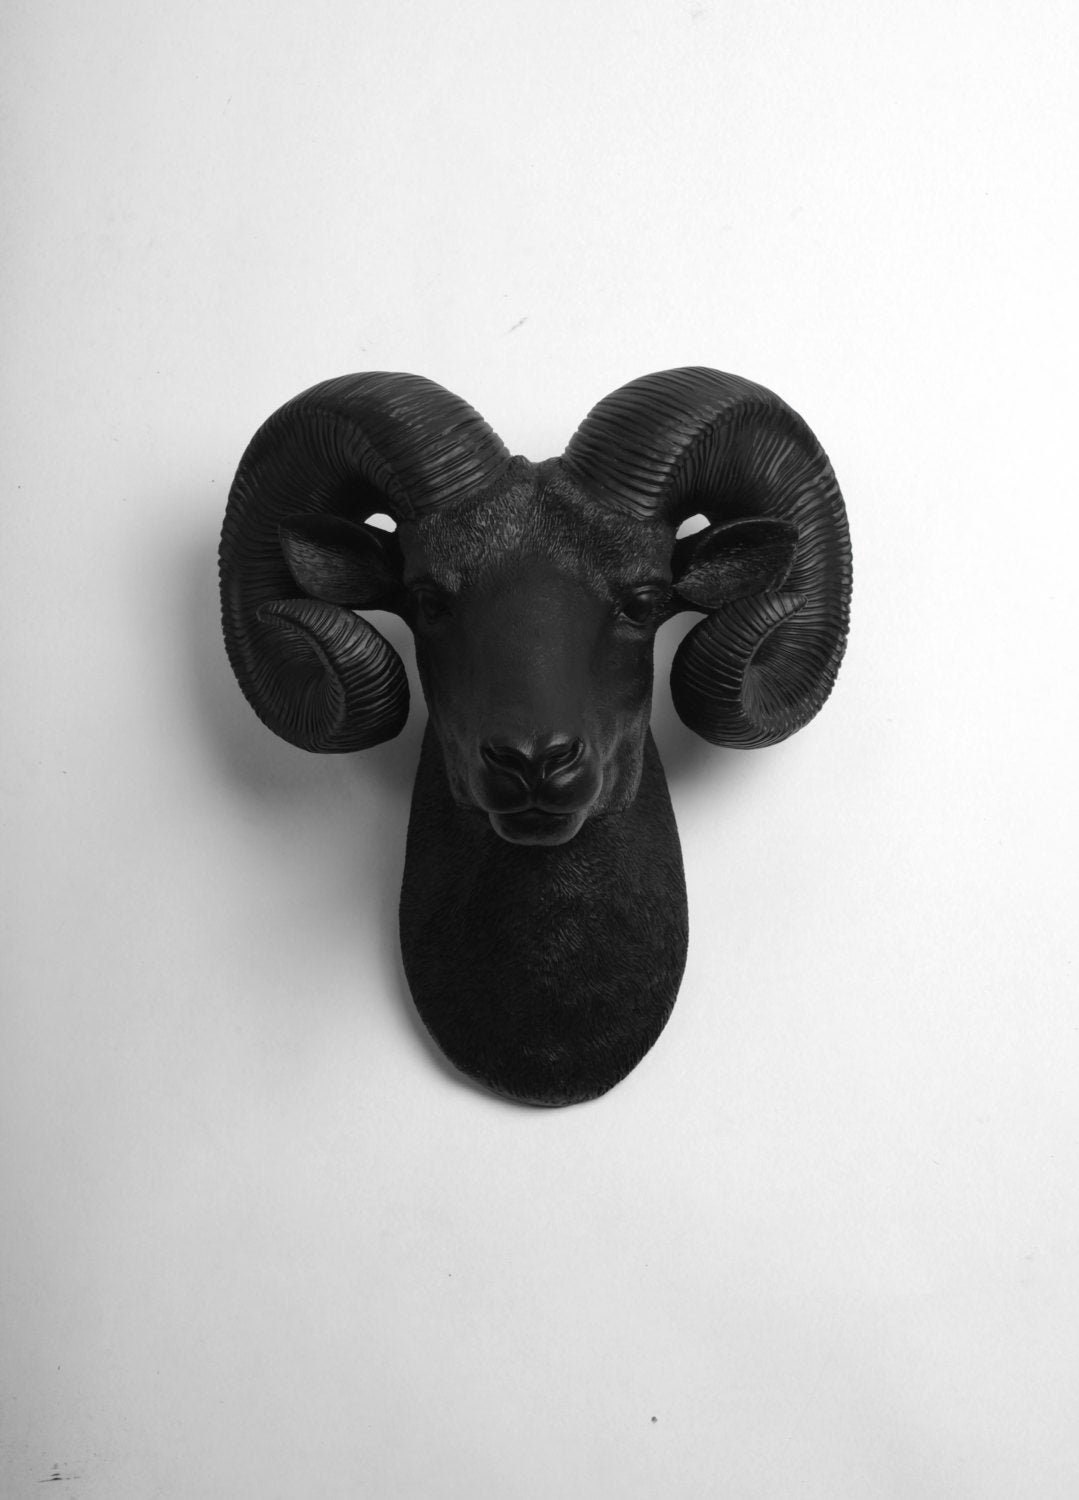 xl Black Ram Head Wall Mount with Horns - The Darby Rustic Bighorn Sheep/Ram, Modern Farmhouse Home Decor By White Faux Taxidermy